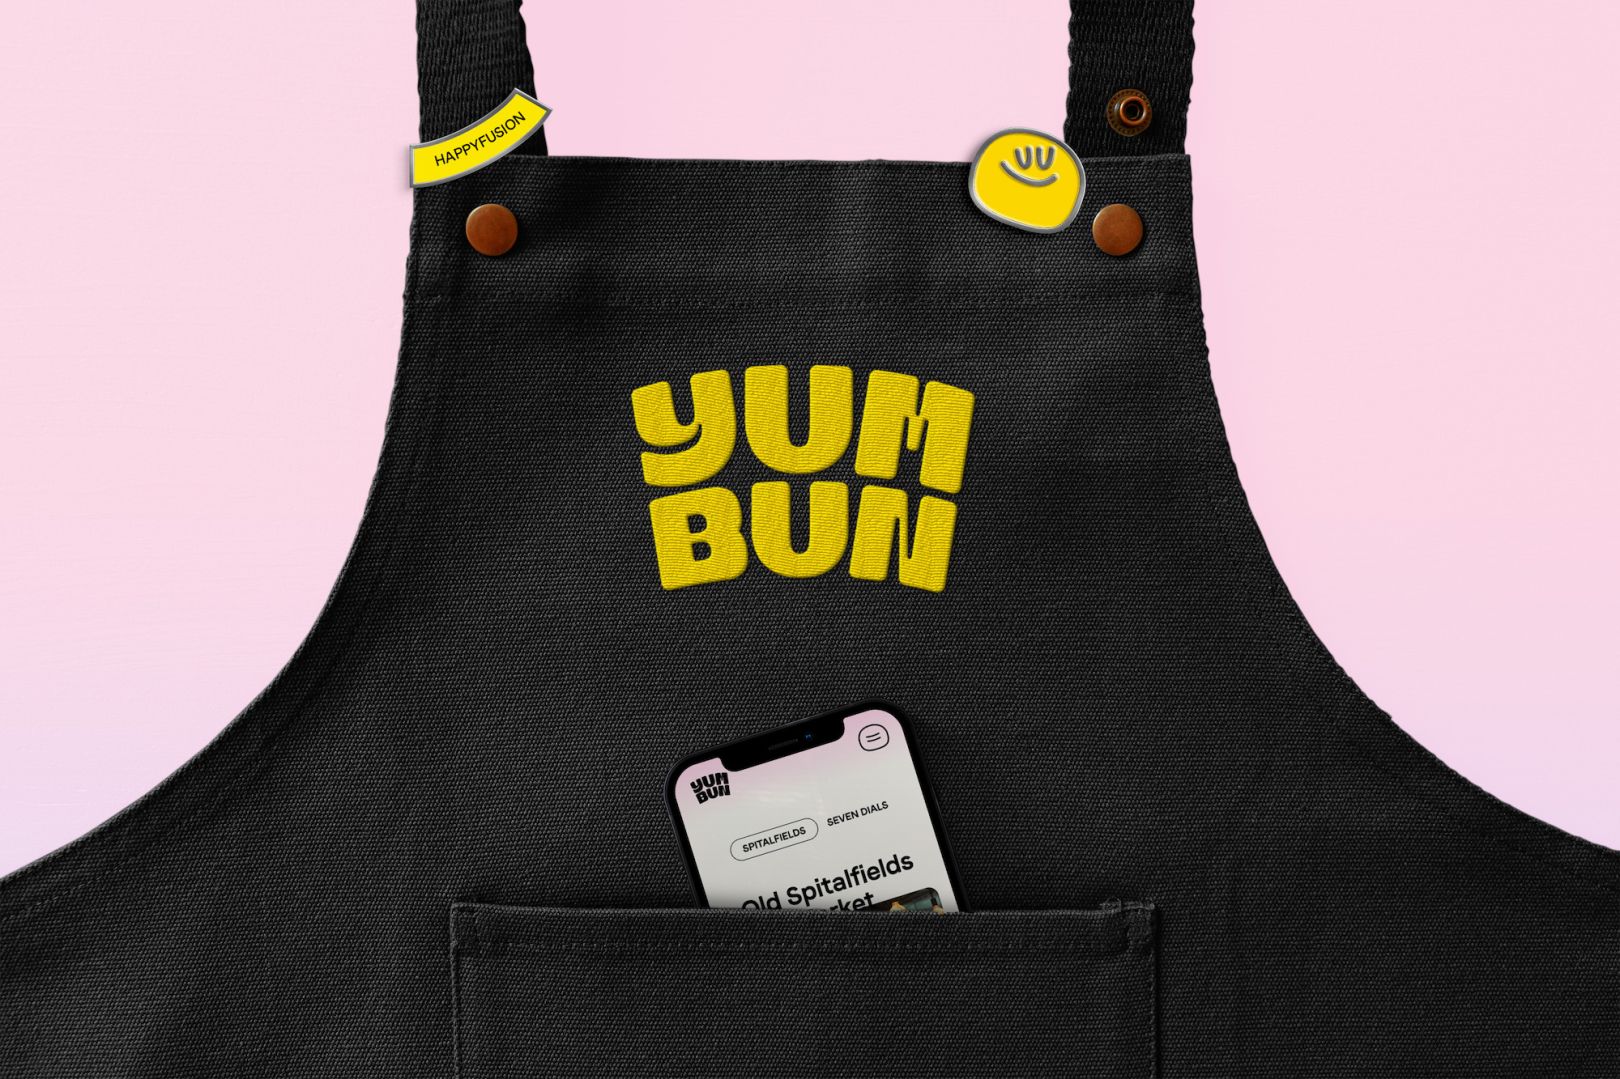  How&How, YumBun rebrand